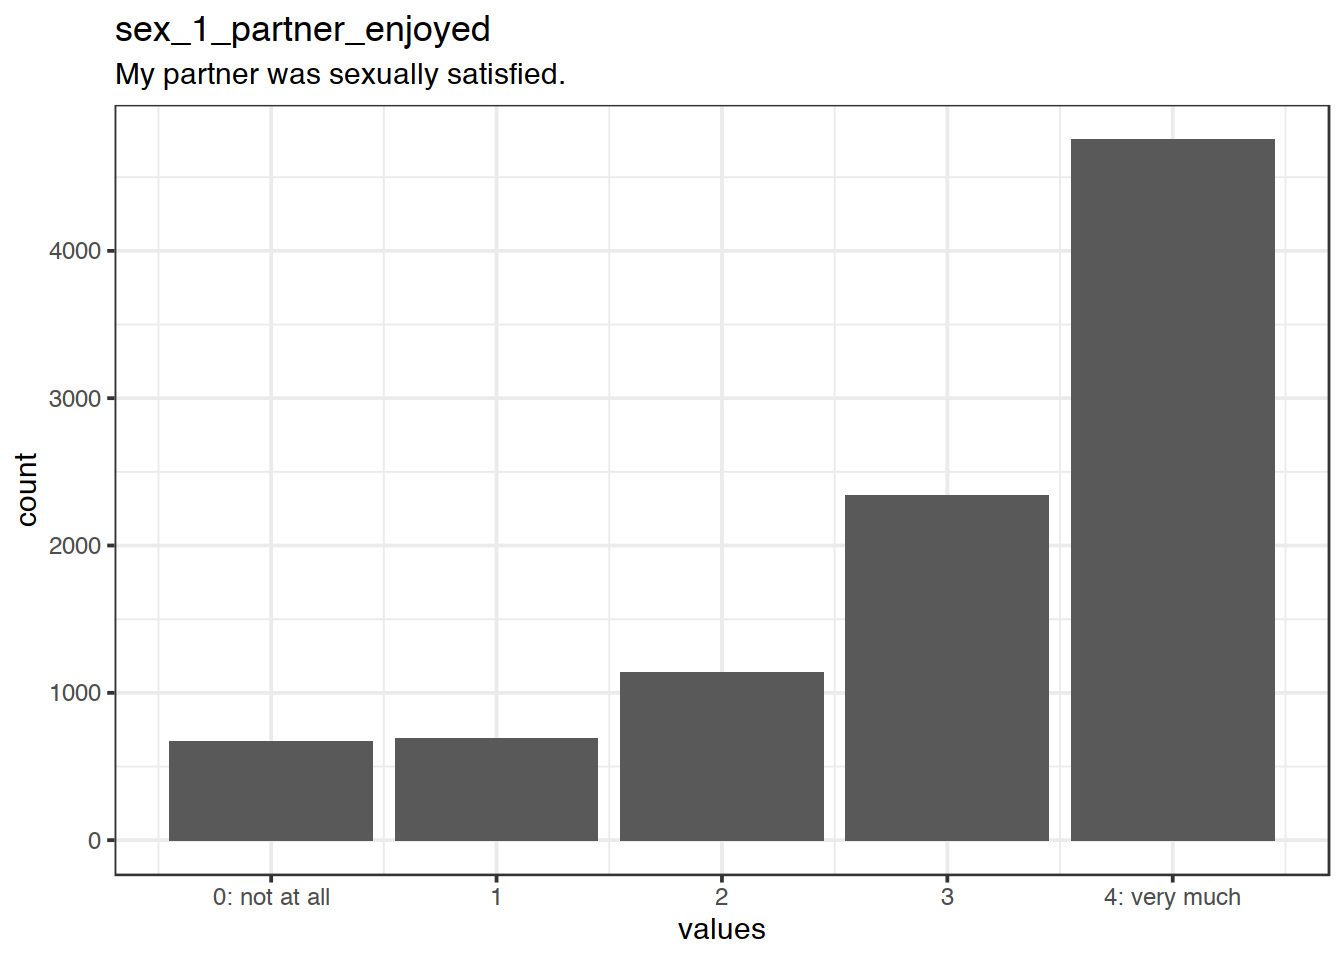 Distribution of values for sex_1_partner_enjoyed